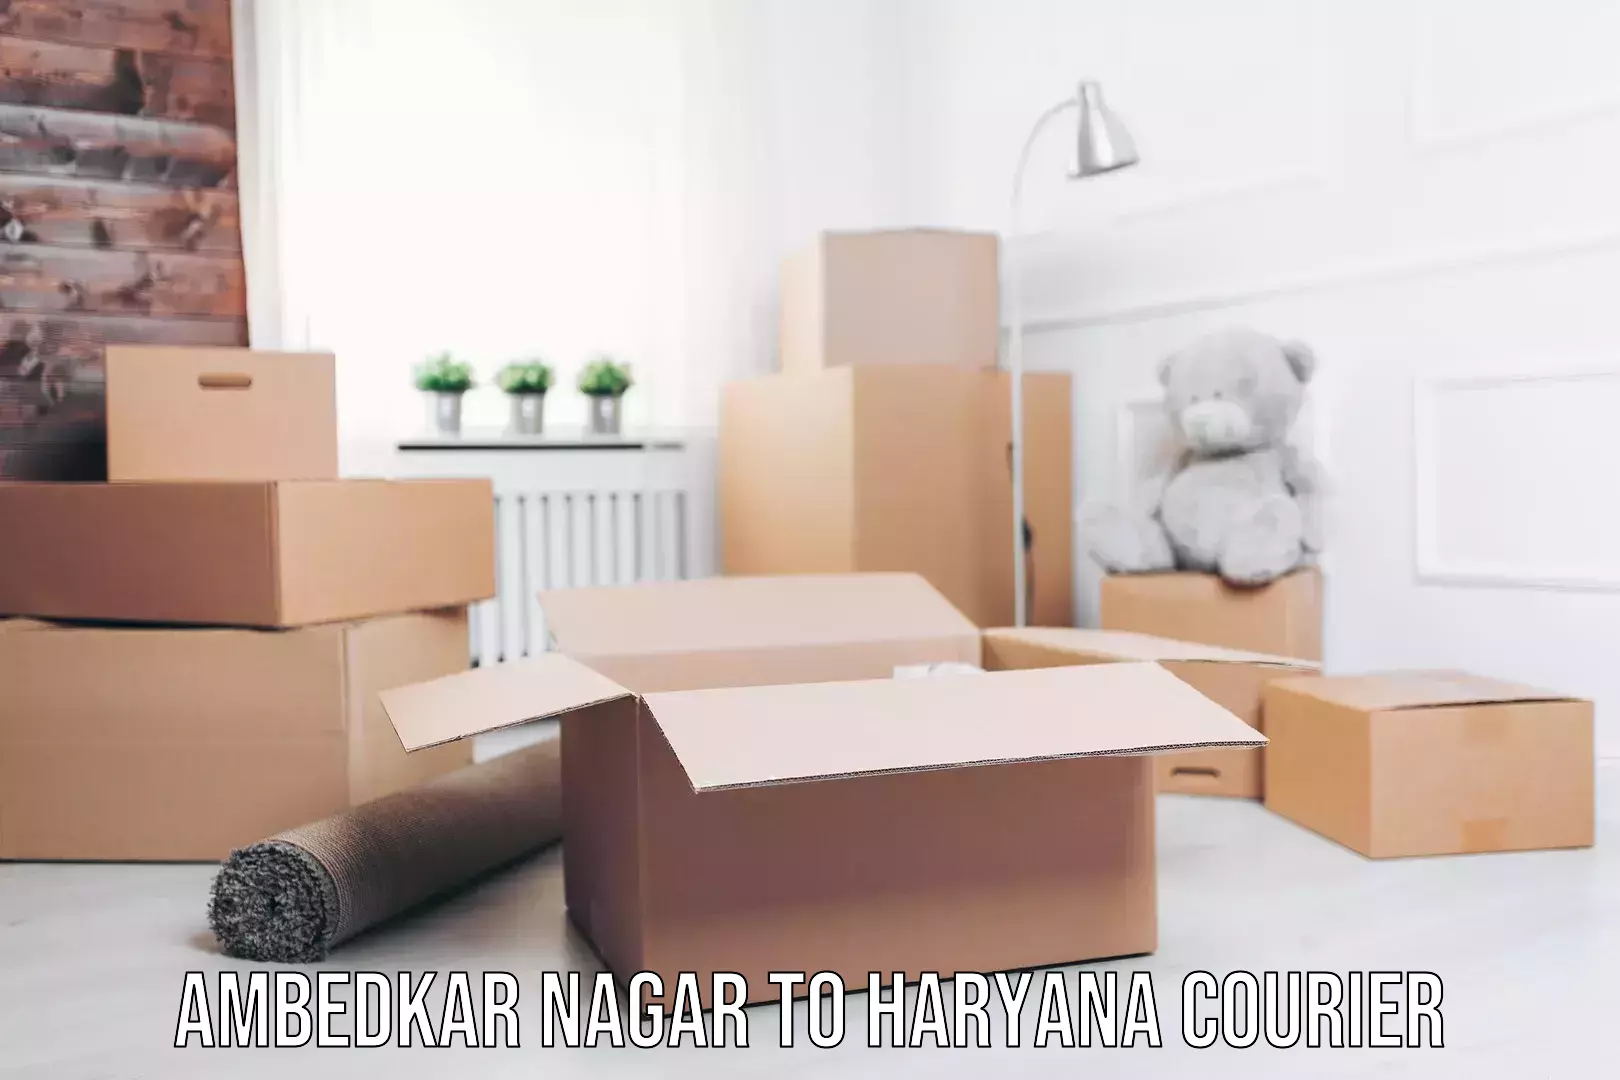 User-friendly delivery service Ambedkar Nagar to Haryana